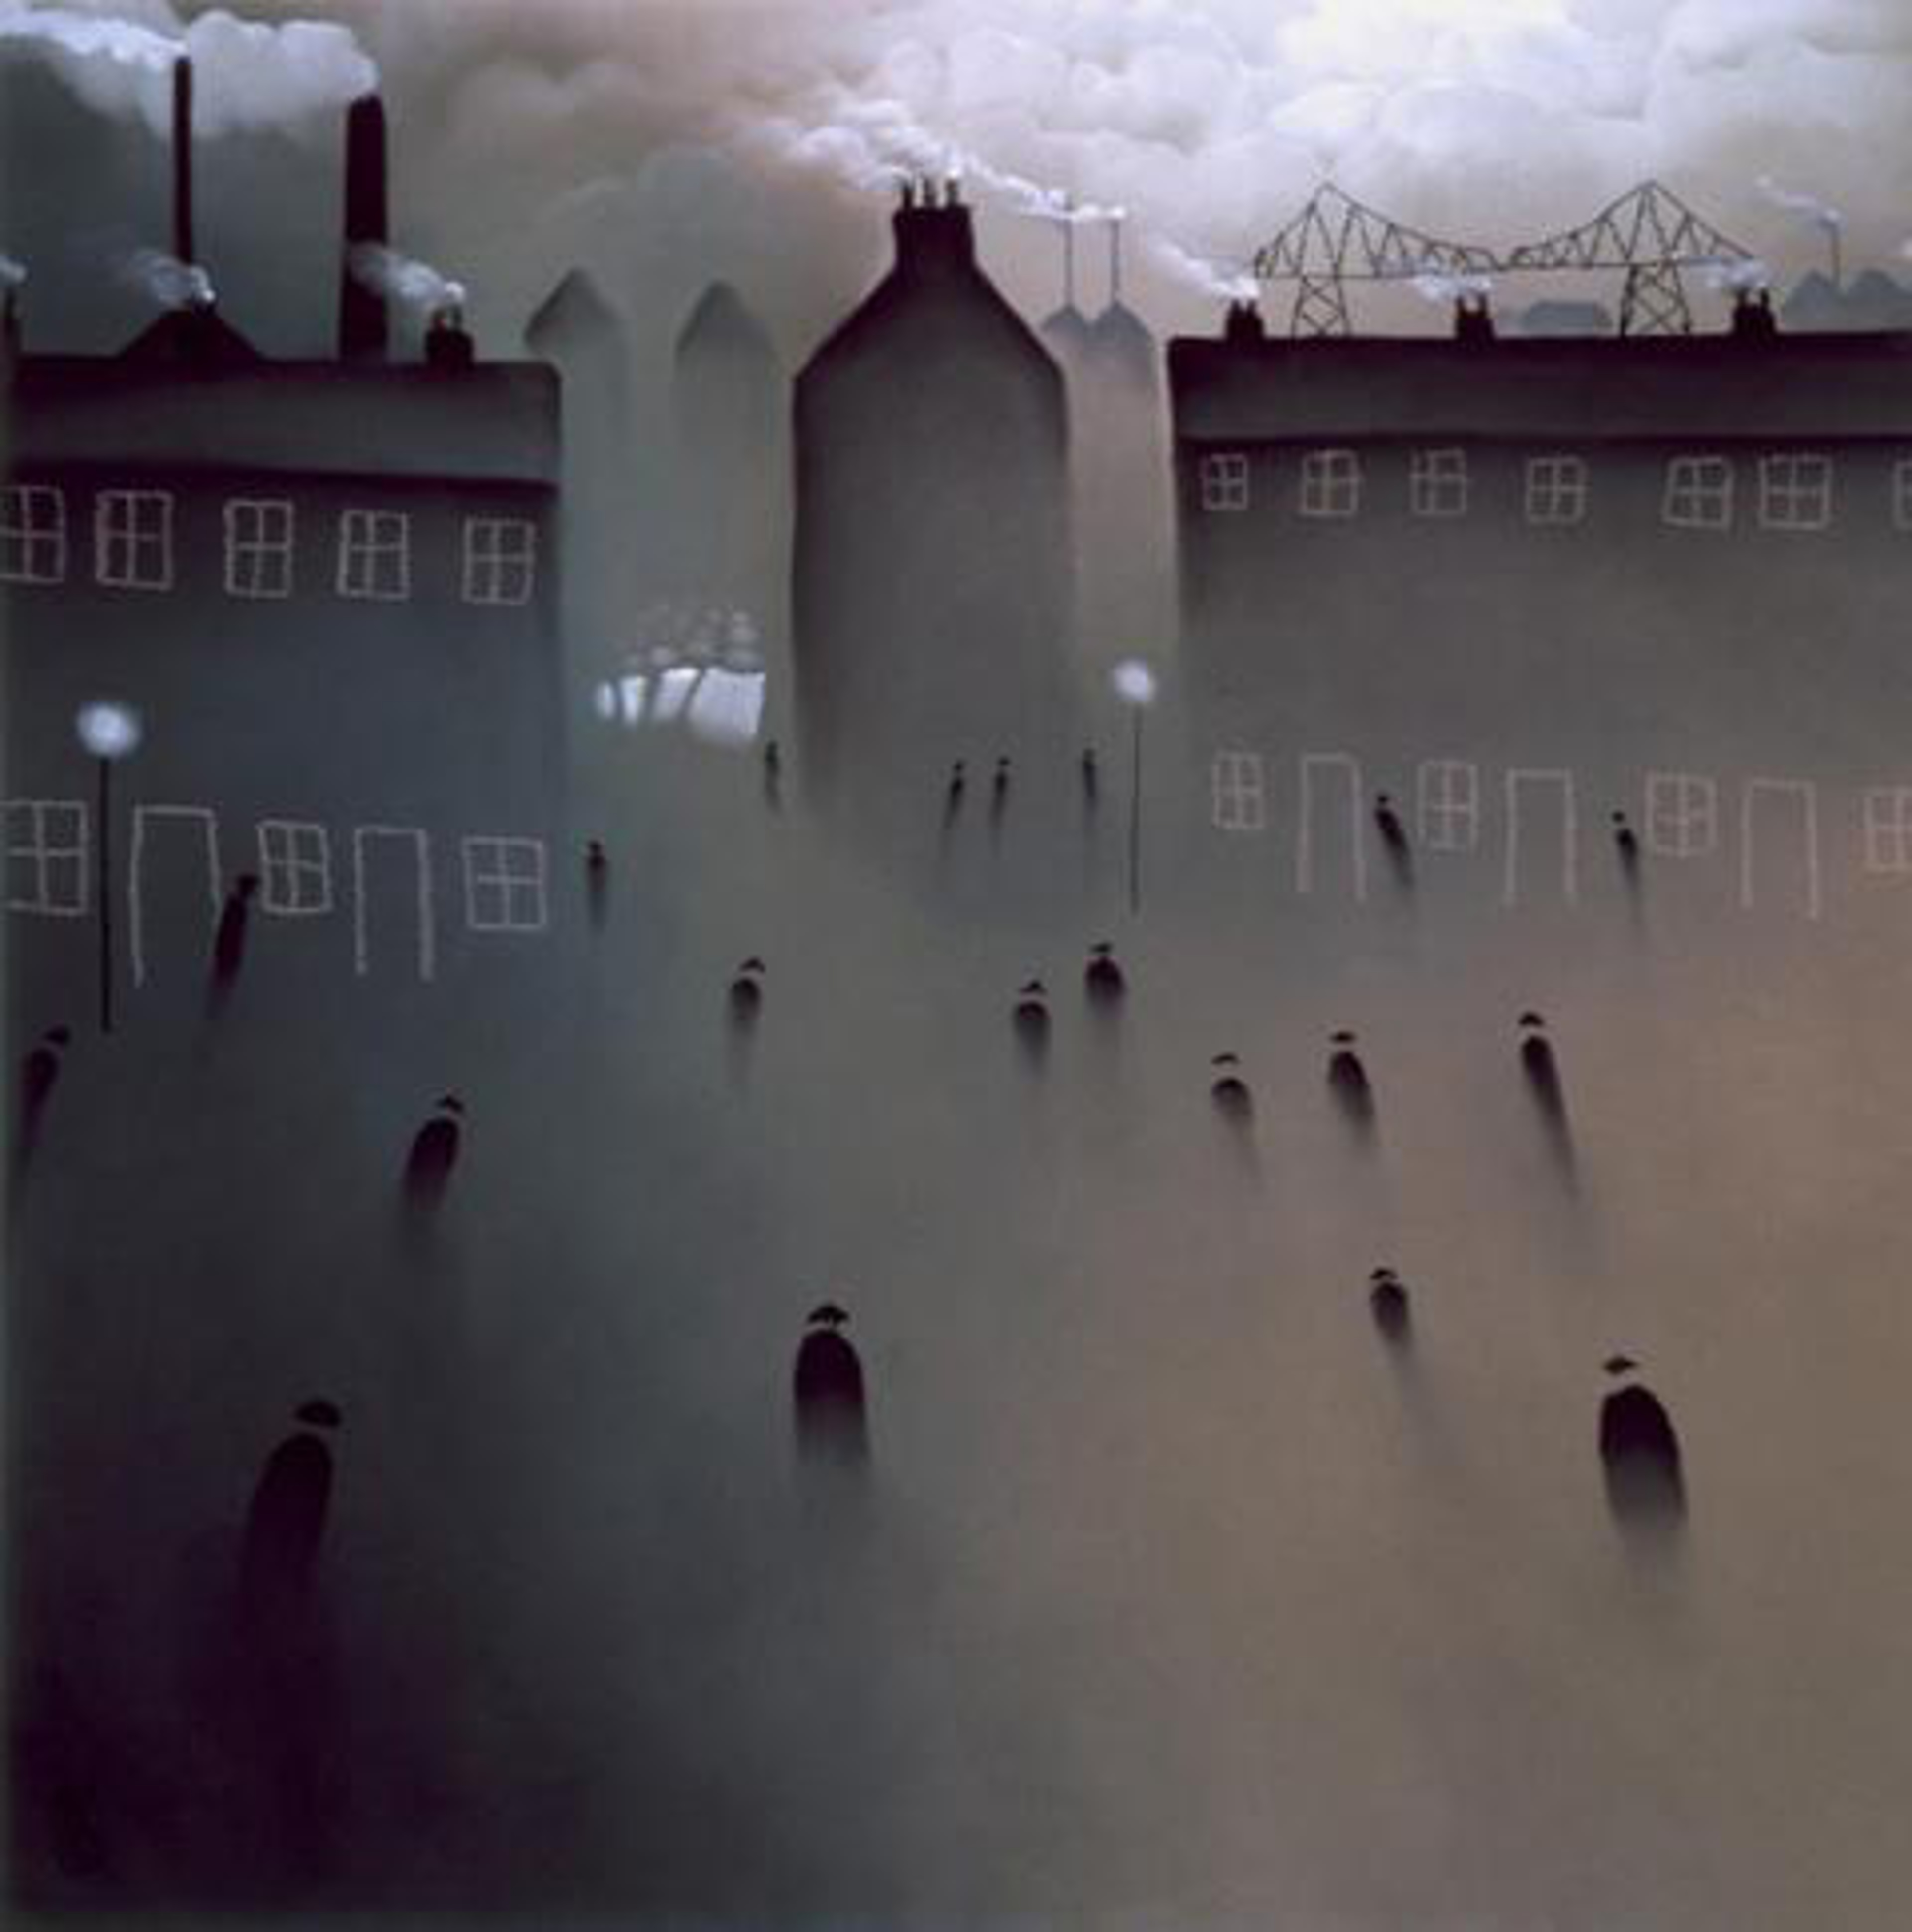 In Mist by Mackenzie Thorpe